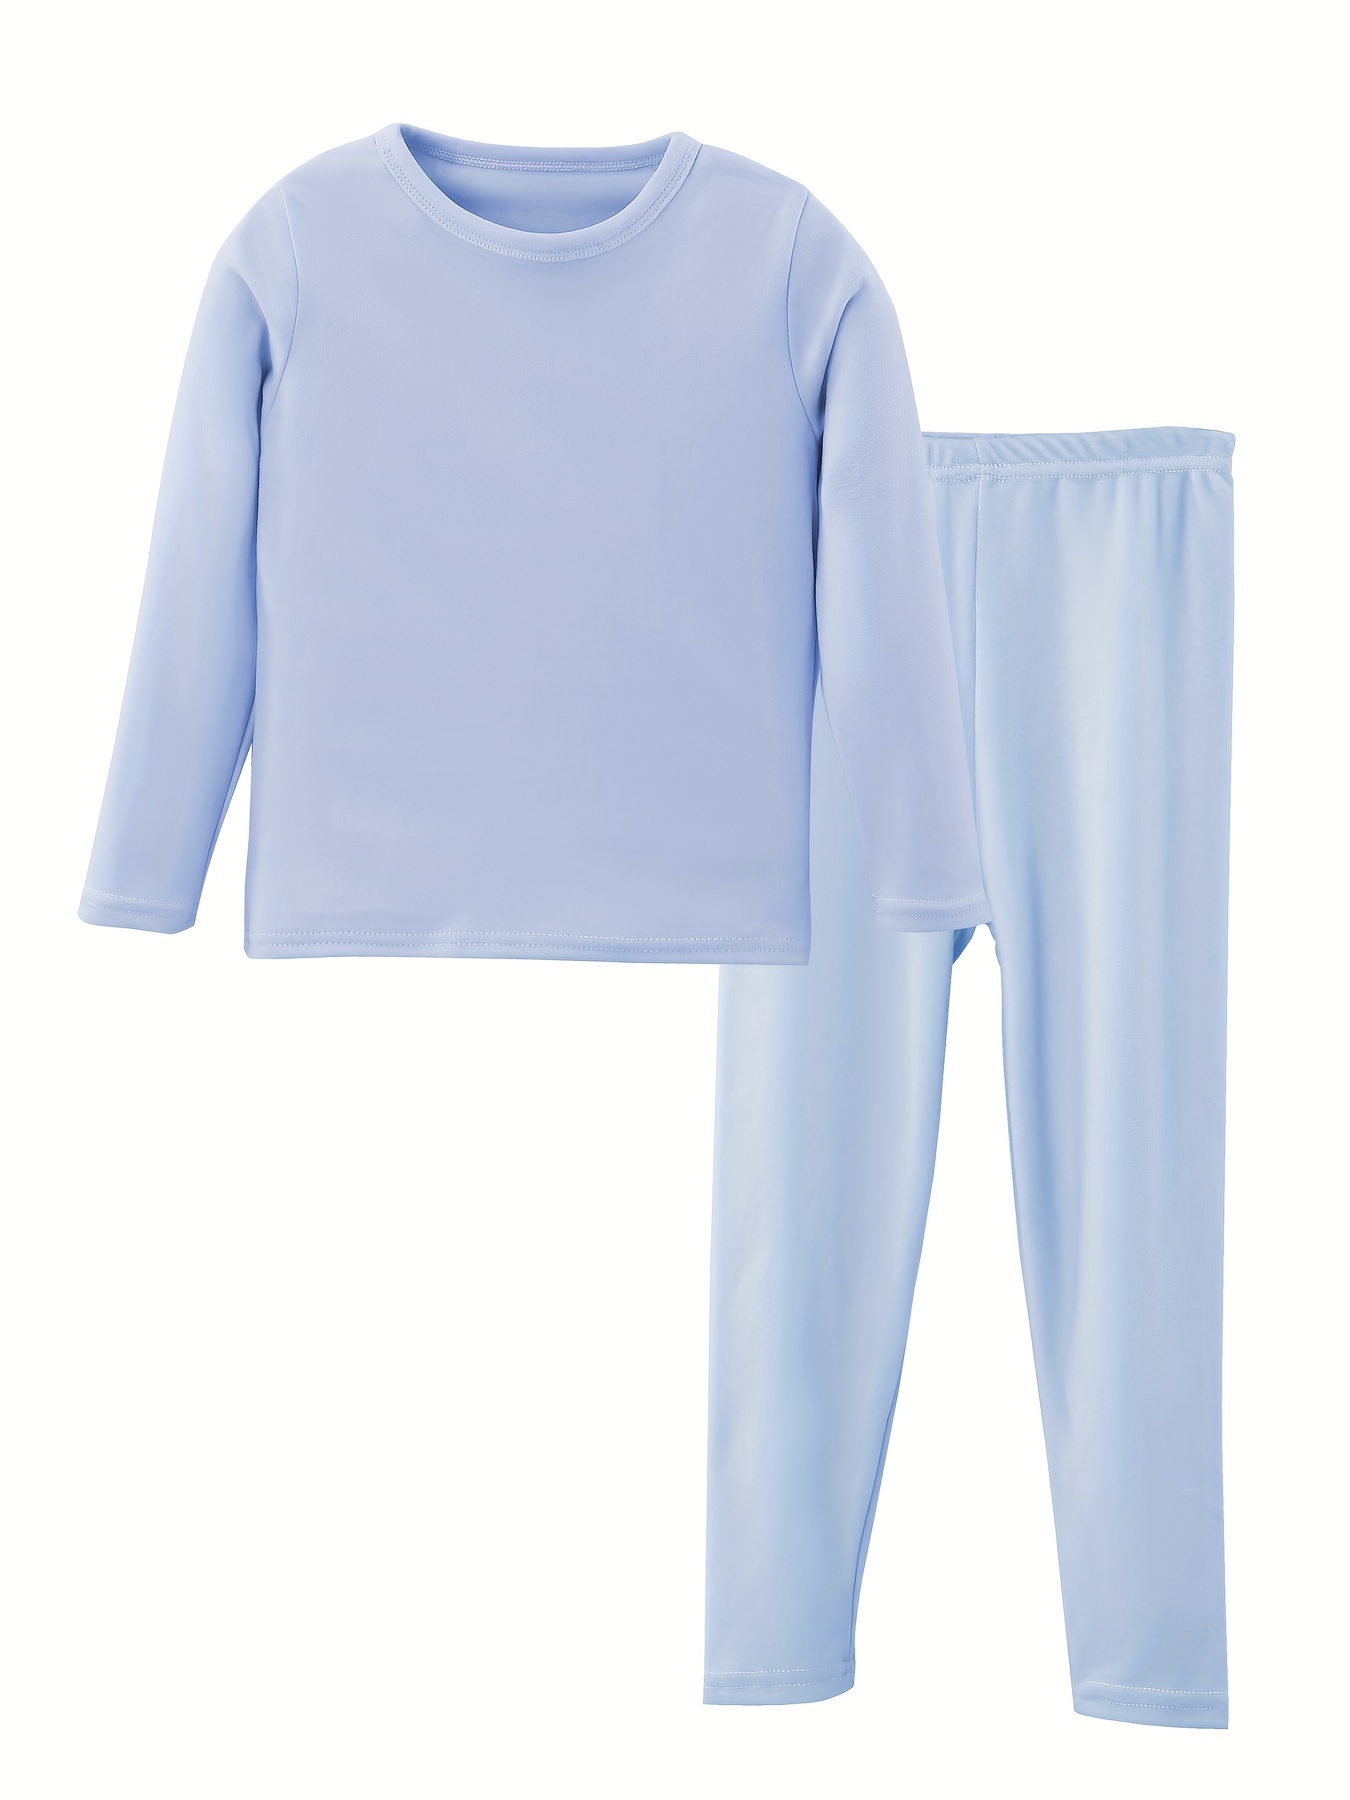 Hansber Baby Girls Boys Thermal Underwear Top Turtleneck T-Shirts Stretchy  Long Sleeve Winter Baselayer Vest